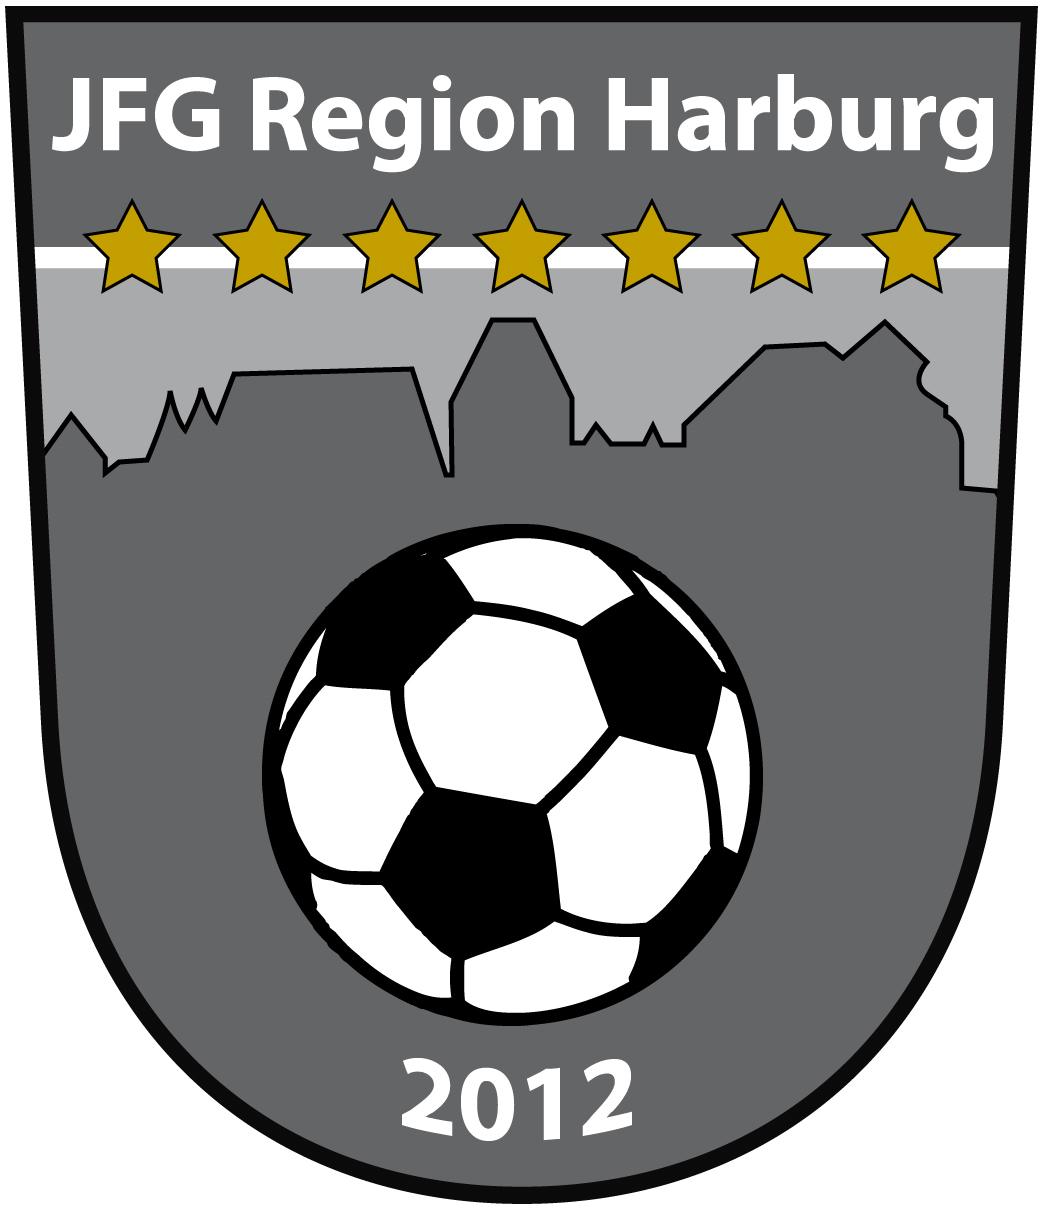 JFG Region Harburg Logo